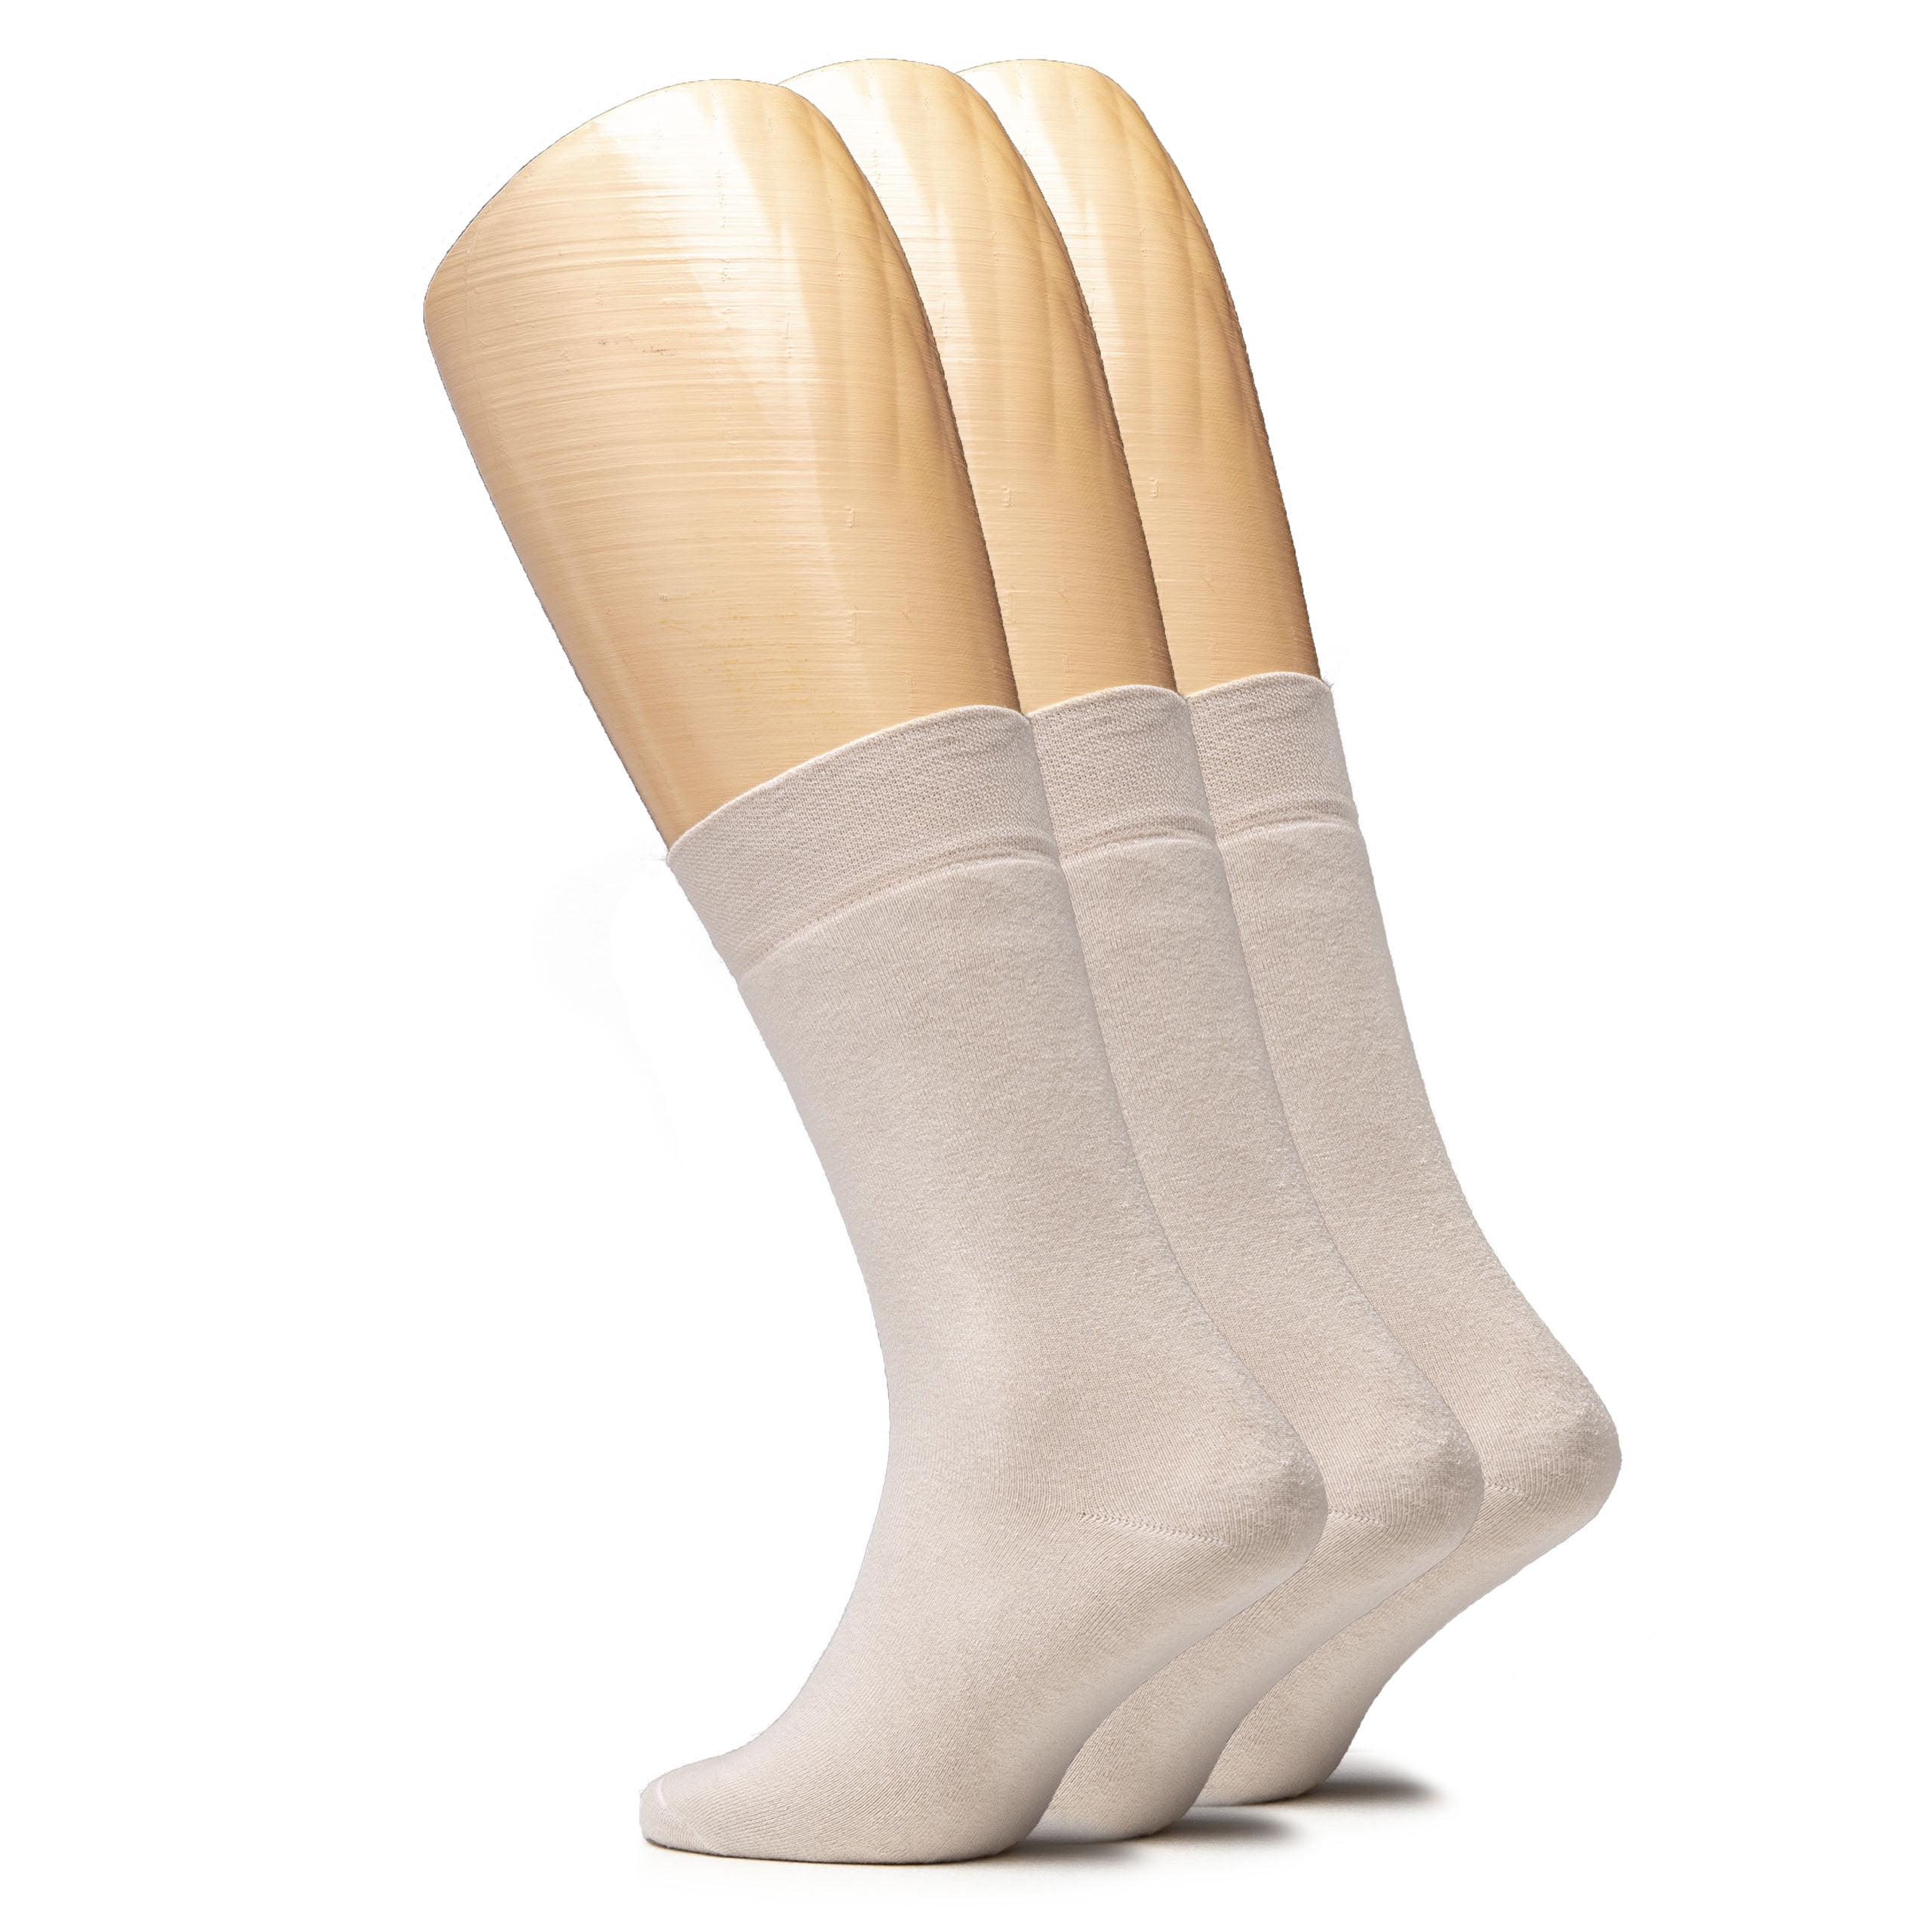 6pp 4 Sizes Baby Cotton Basic Crew Socks Premium Cotton Handlinked Toe Seam